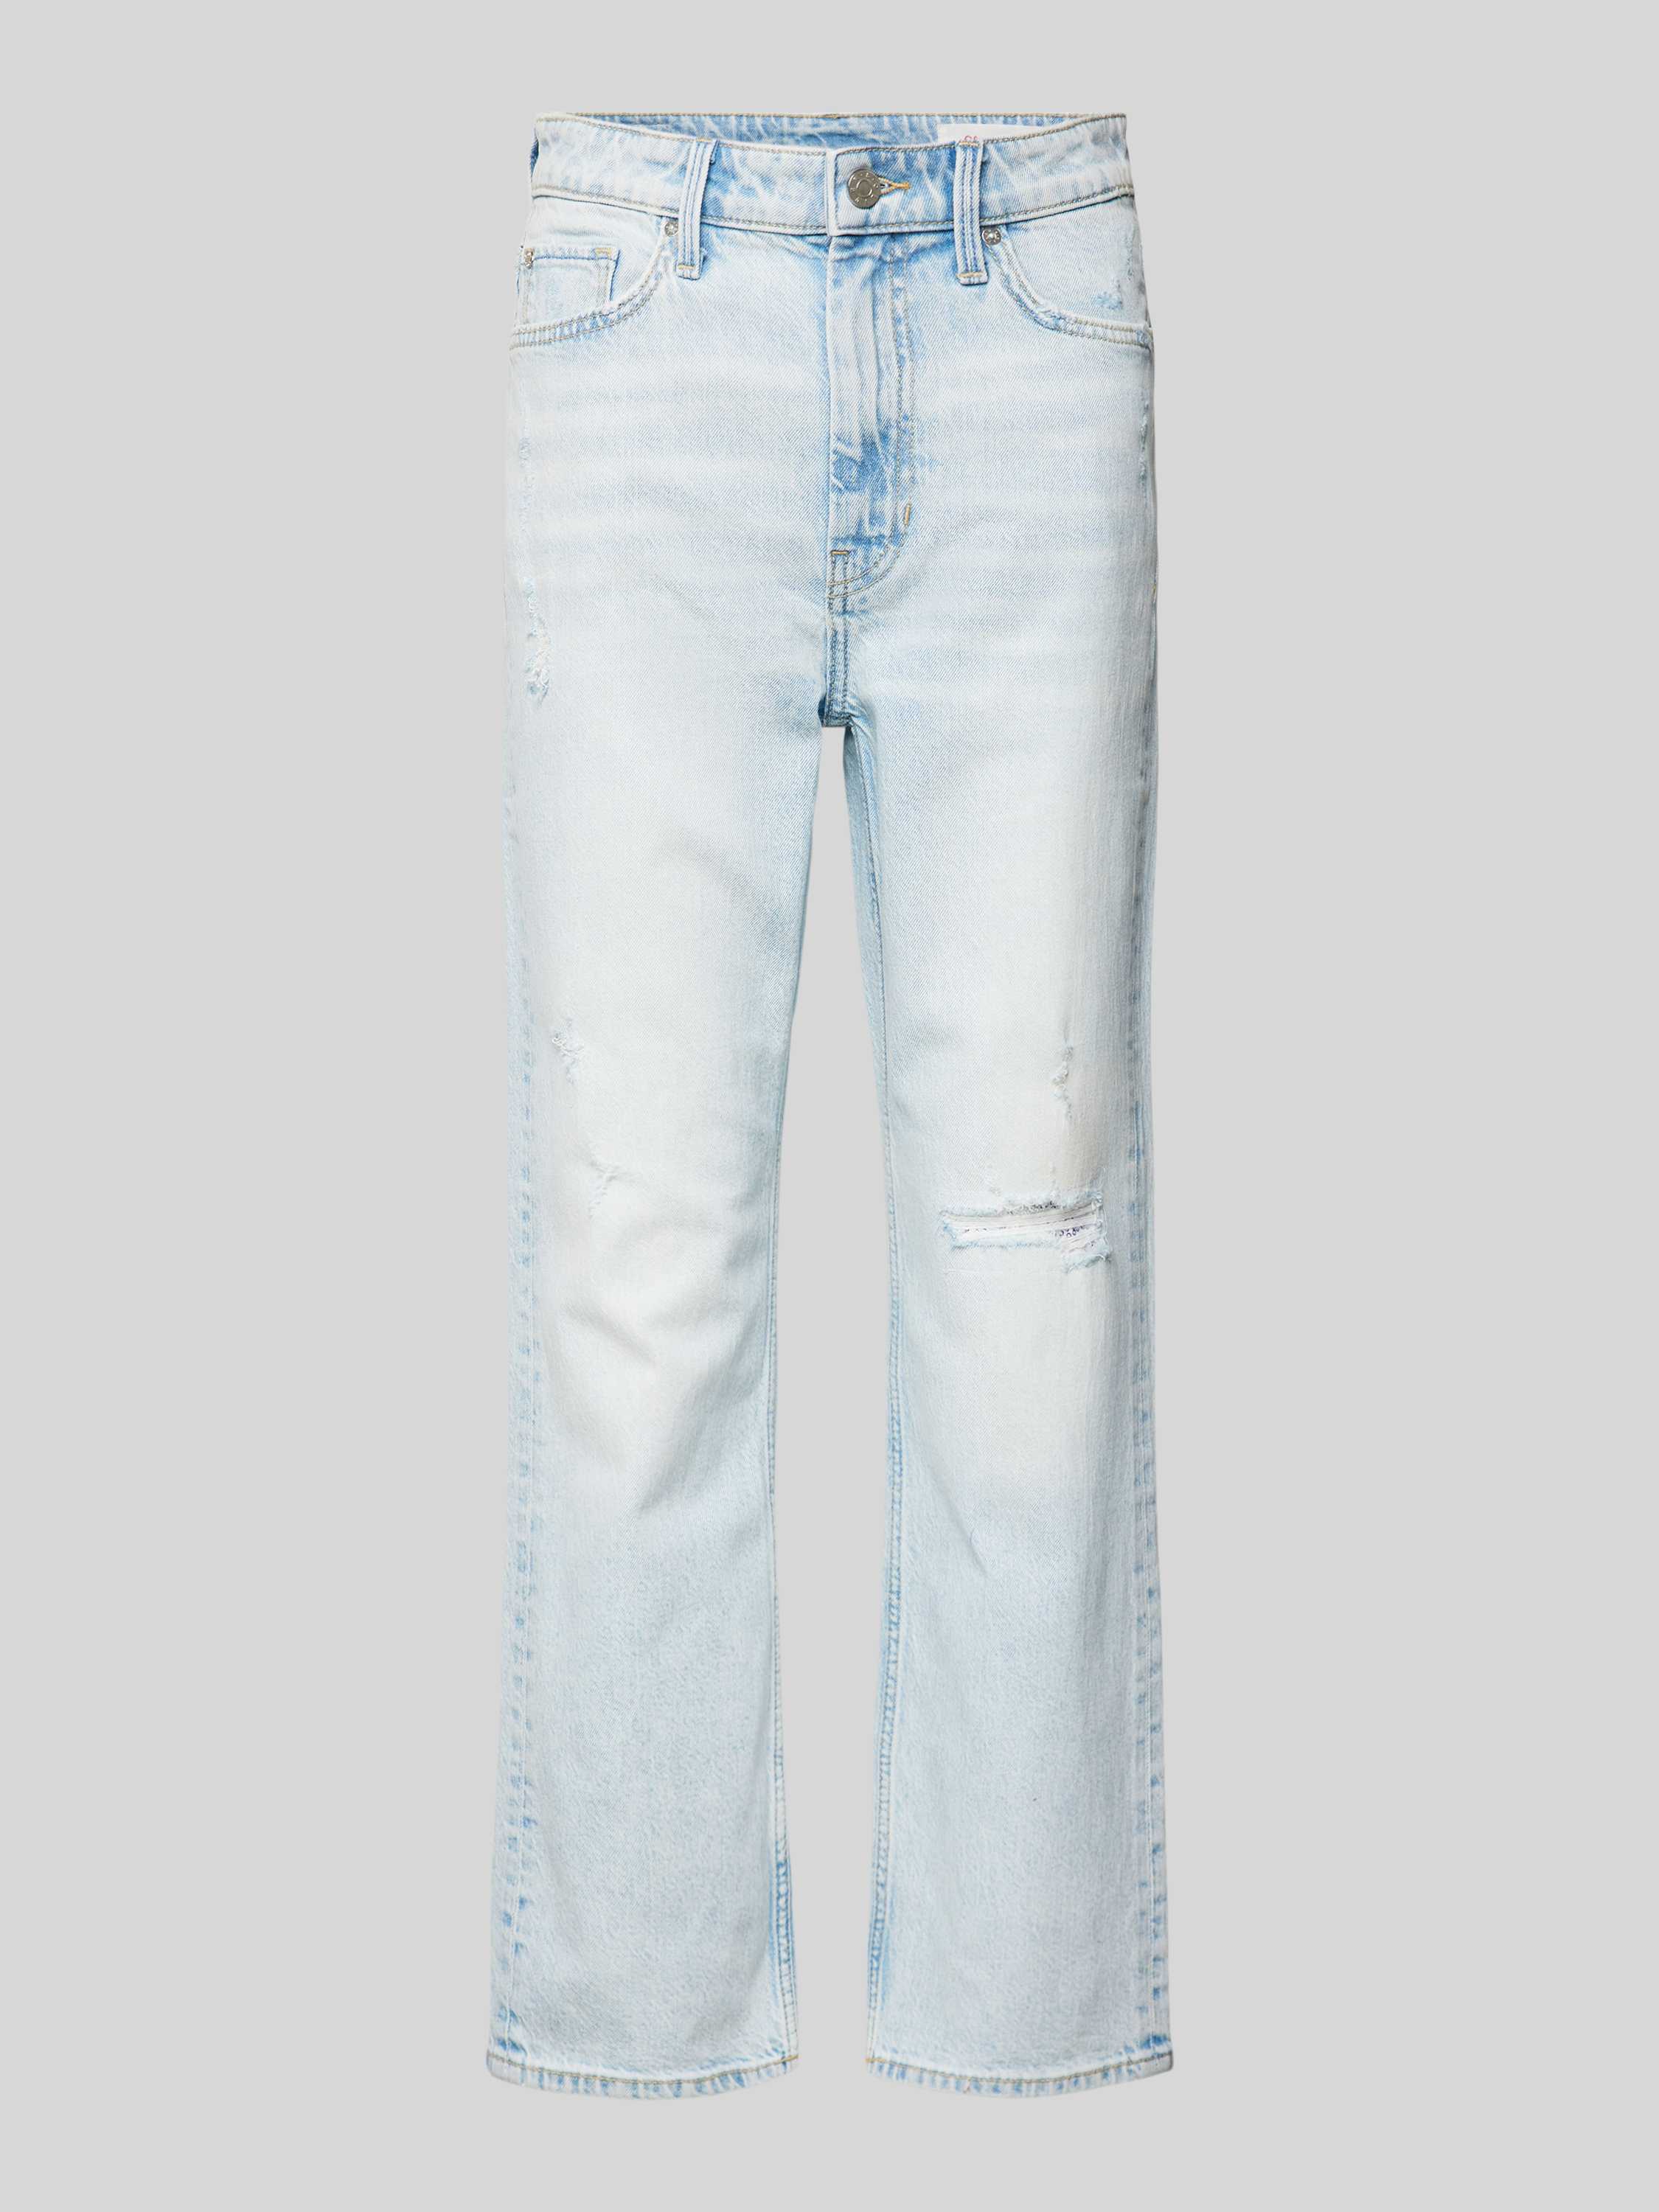 S.Oliver RED LABEL Bootcut jeans in destroyed-look model 'Destroyed Paillette'